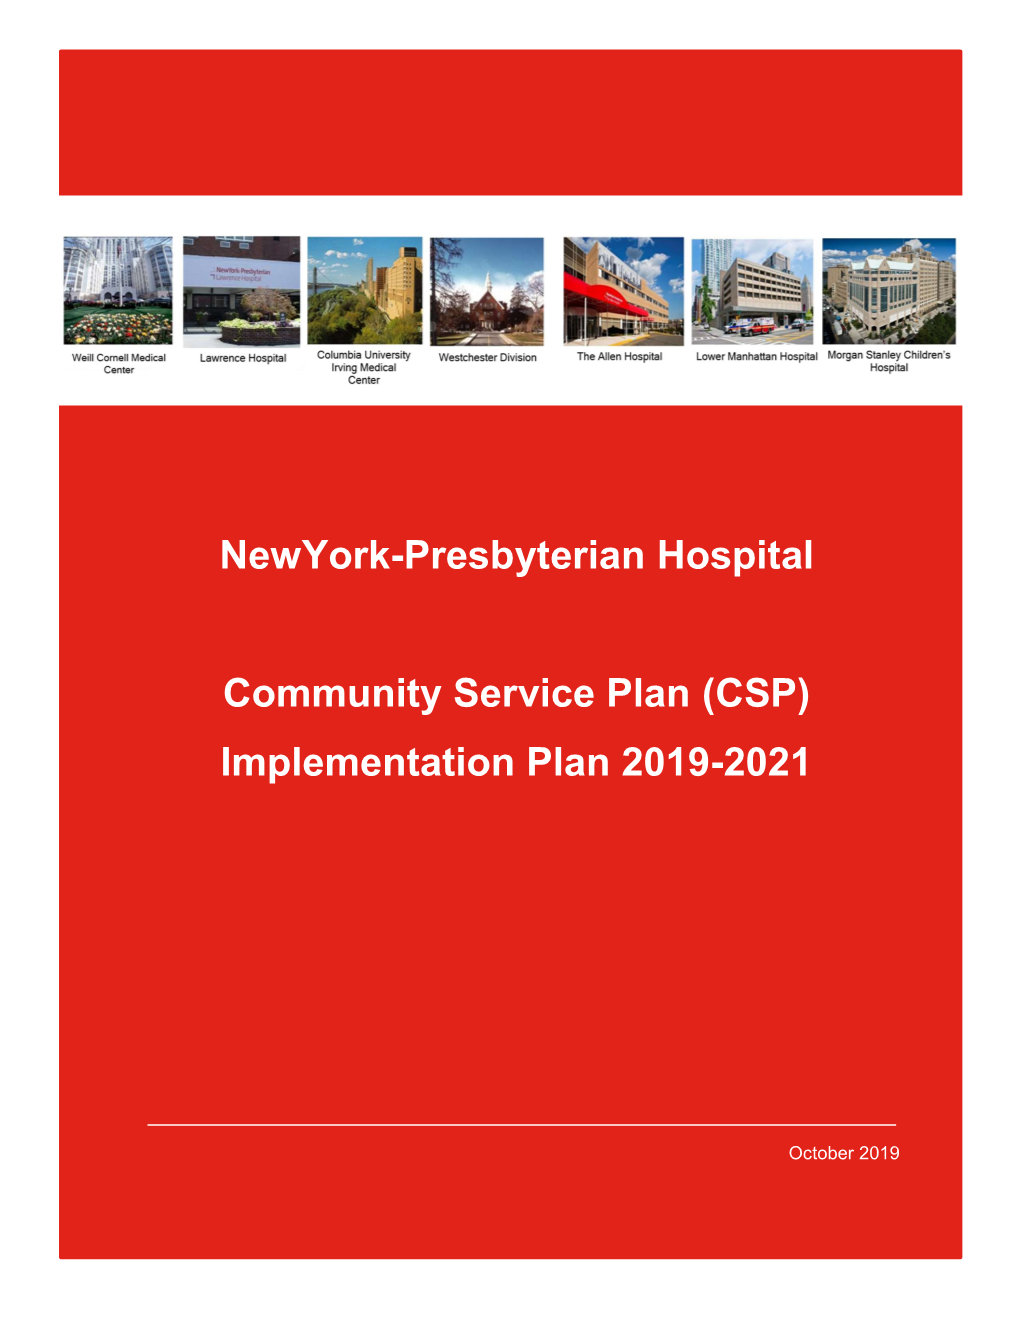 Newyork-Presbyterian Hospital Community Service Plan 2019-2021